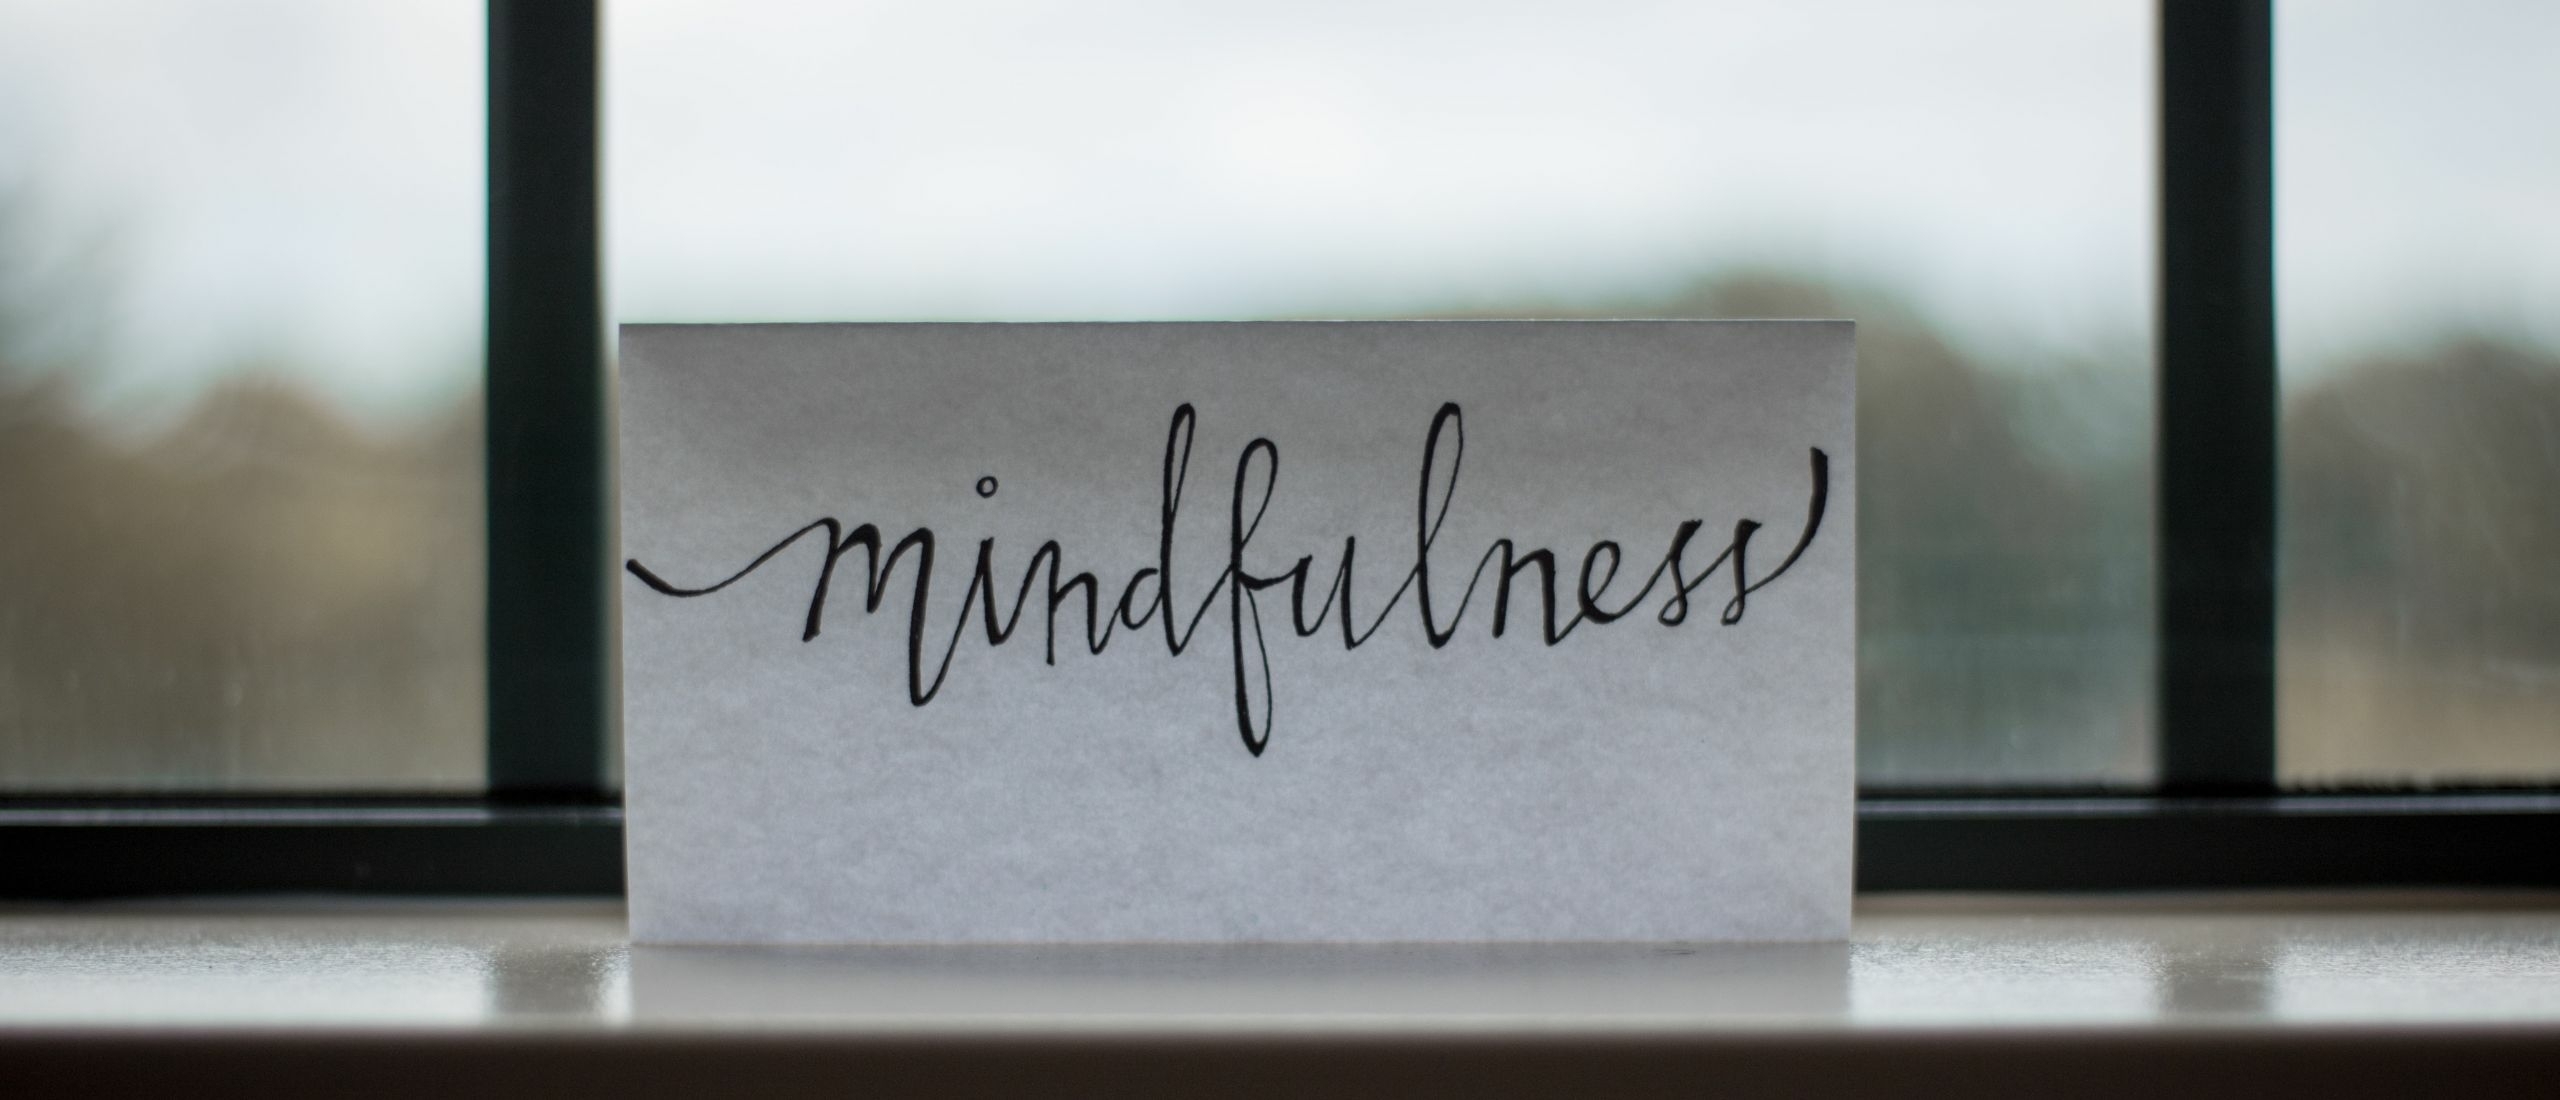 mindfulness-wat-is-dat